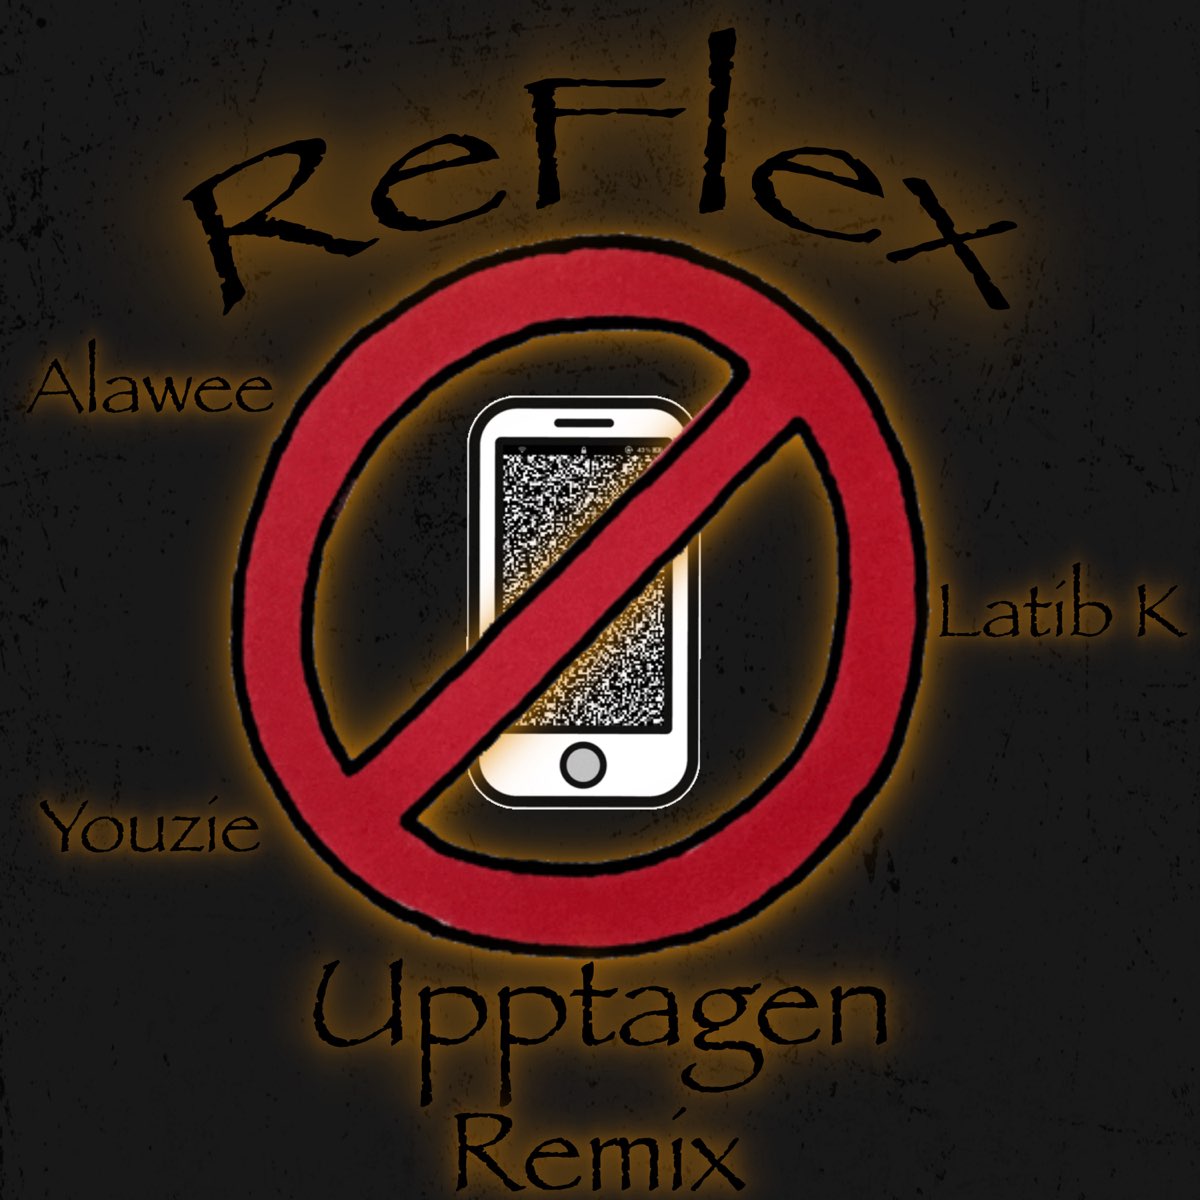 Upptagen. Ruff style feat bass reflex remix